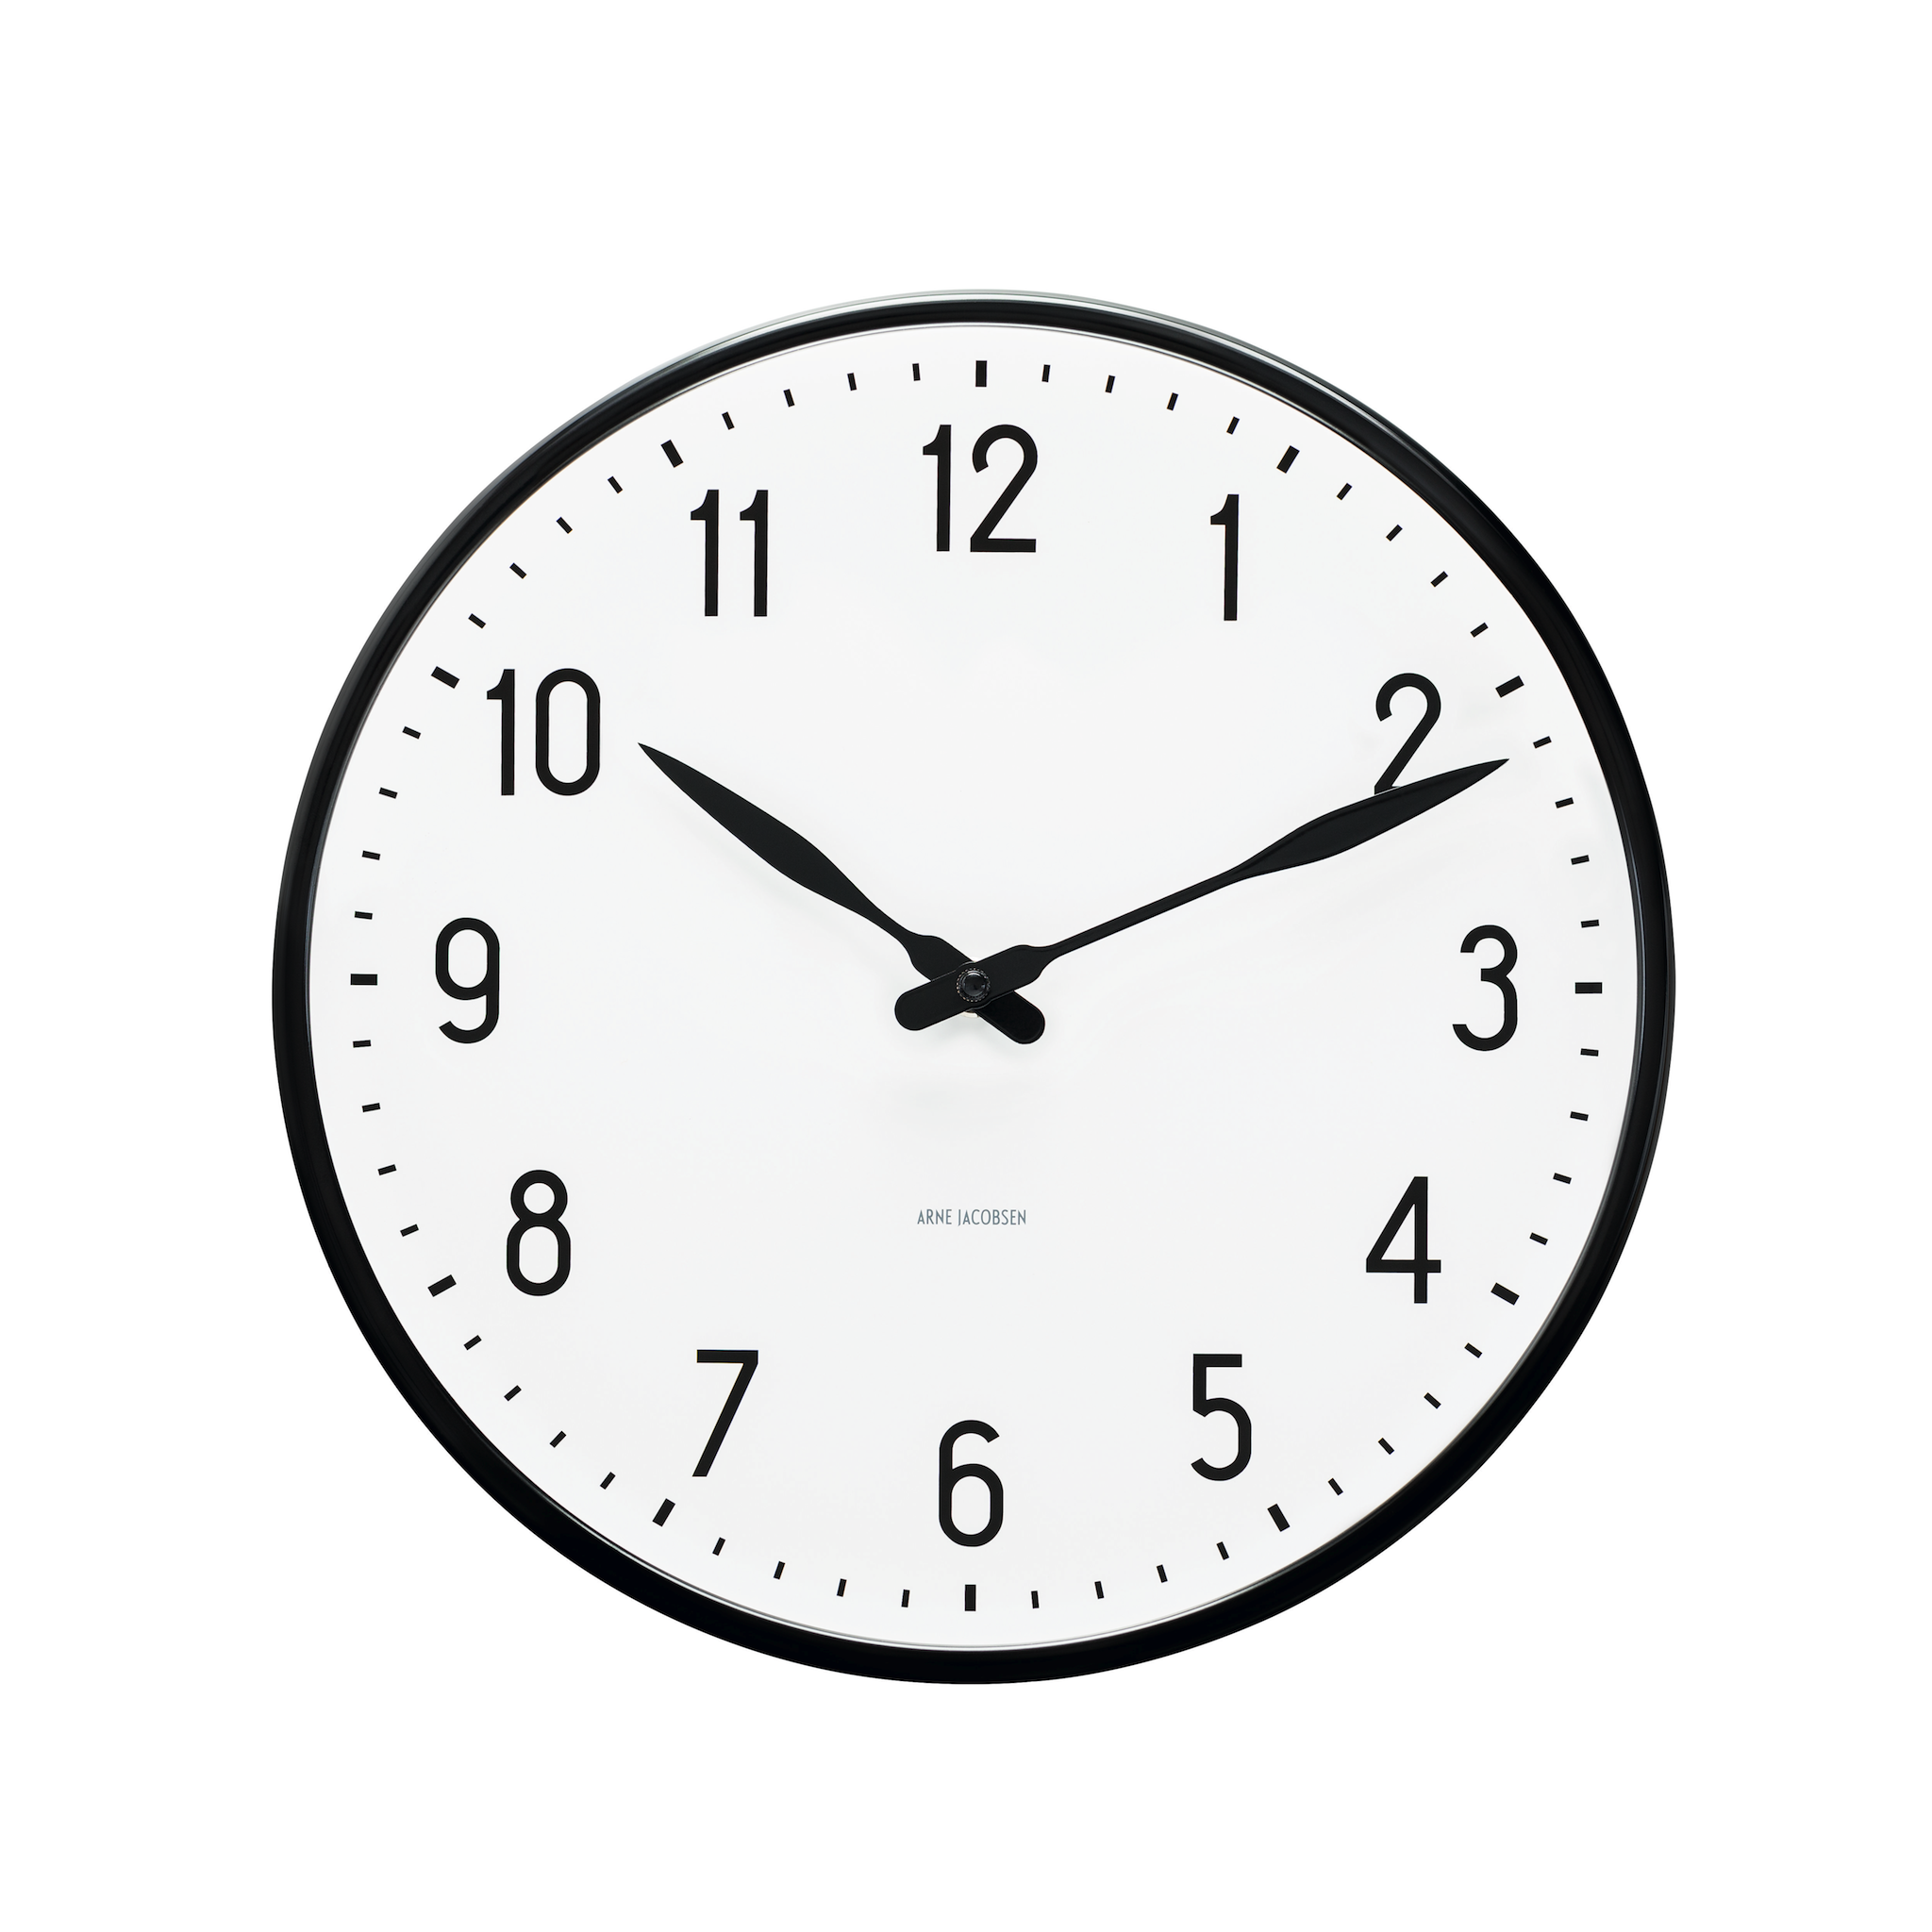 Arne Jacobsen Station Wall Clock, 11.4" / 29 cm